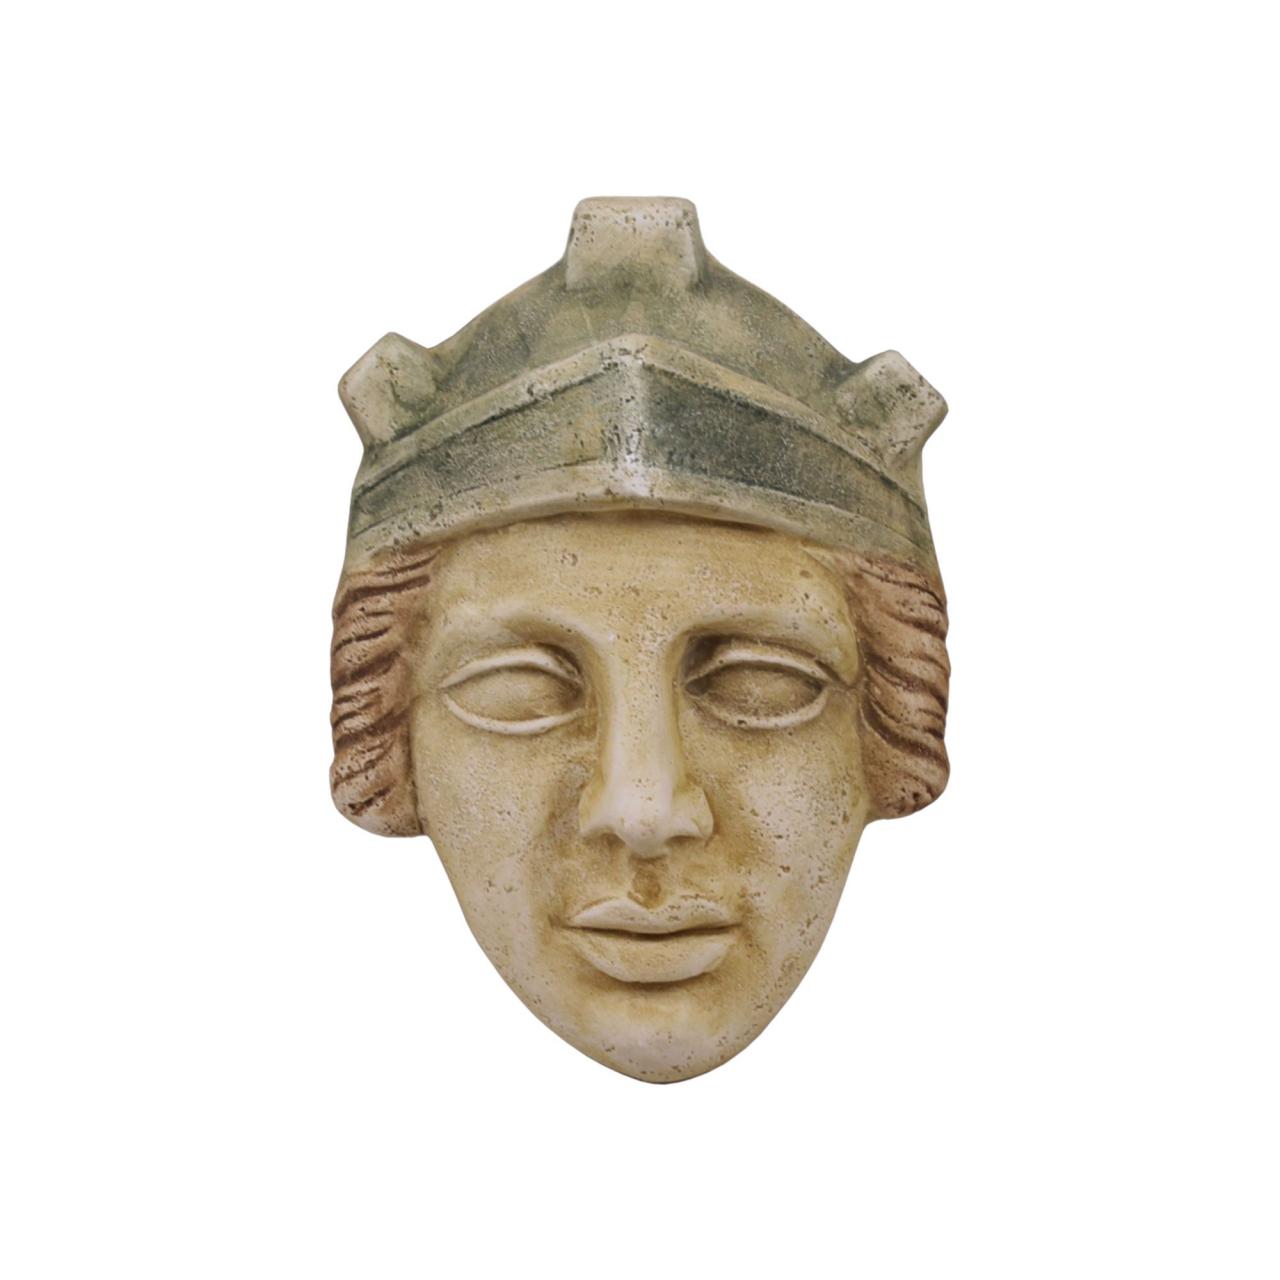 Athena Goddess Bas Relief Wall Mask Plaster Sculpture